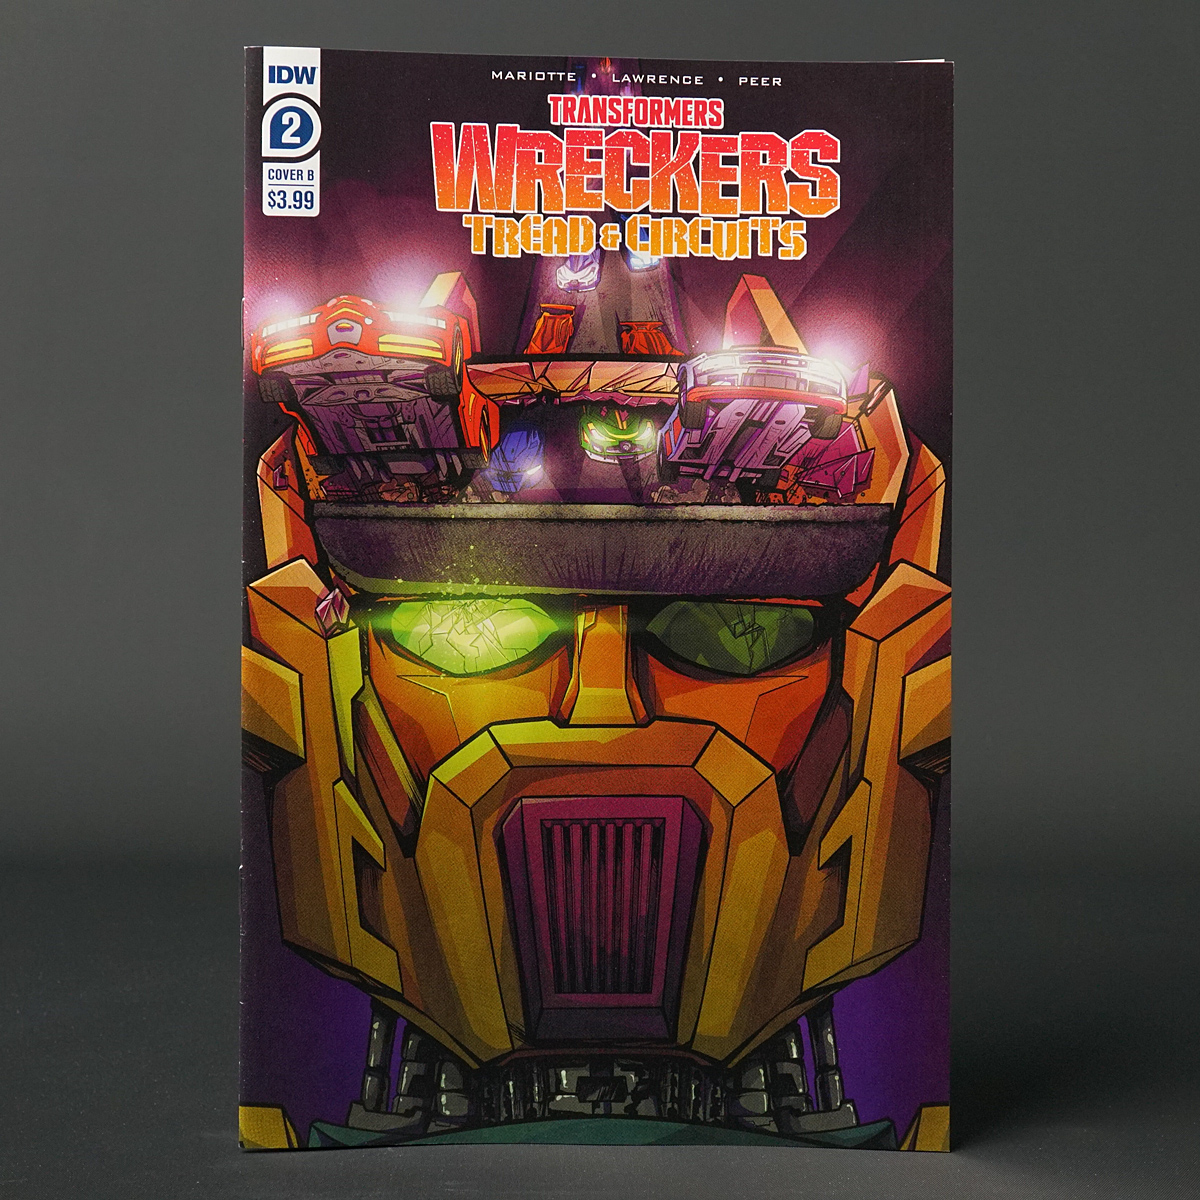 Transformers Wreckers TREAD & CIRCUITS #2 Cvr B IDW Comics 2021 SEP210491 2B